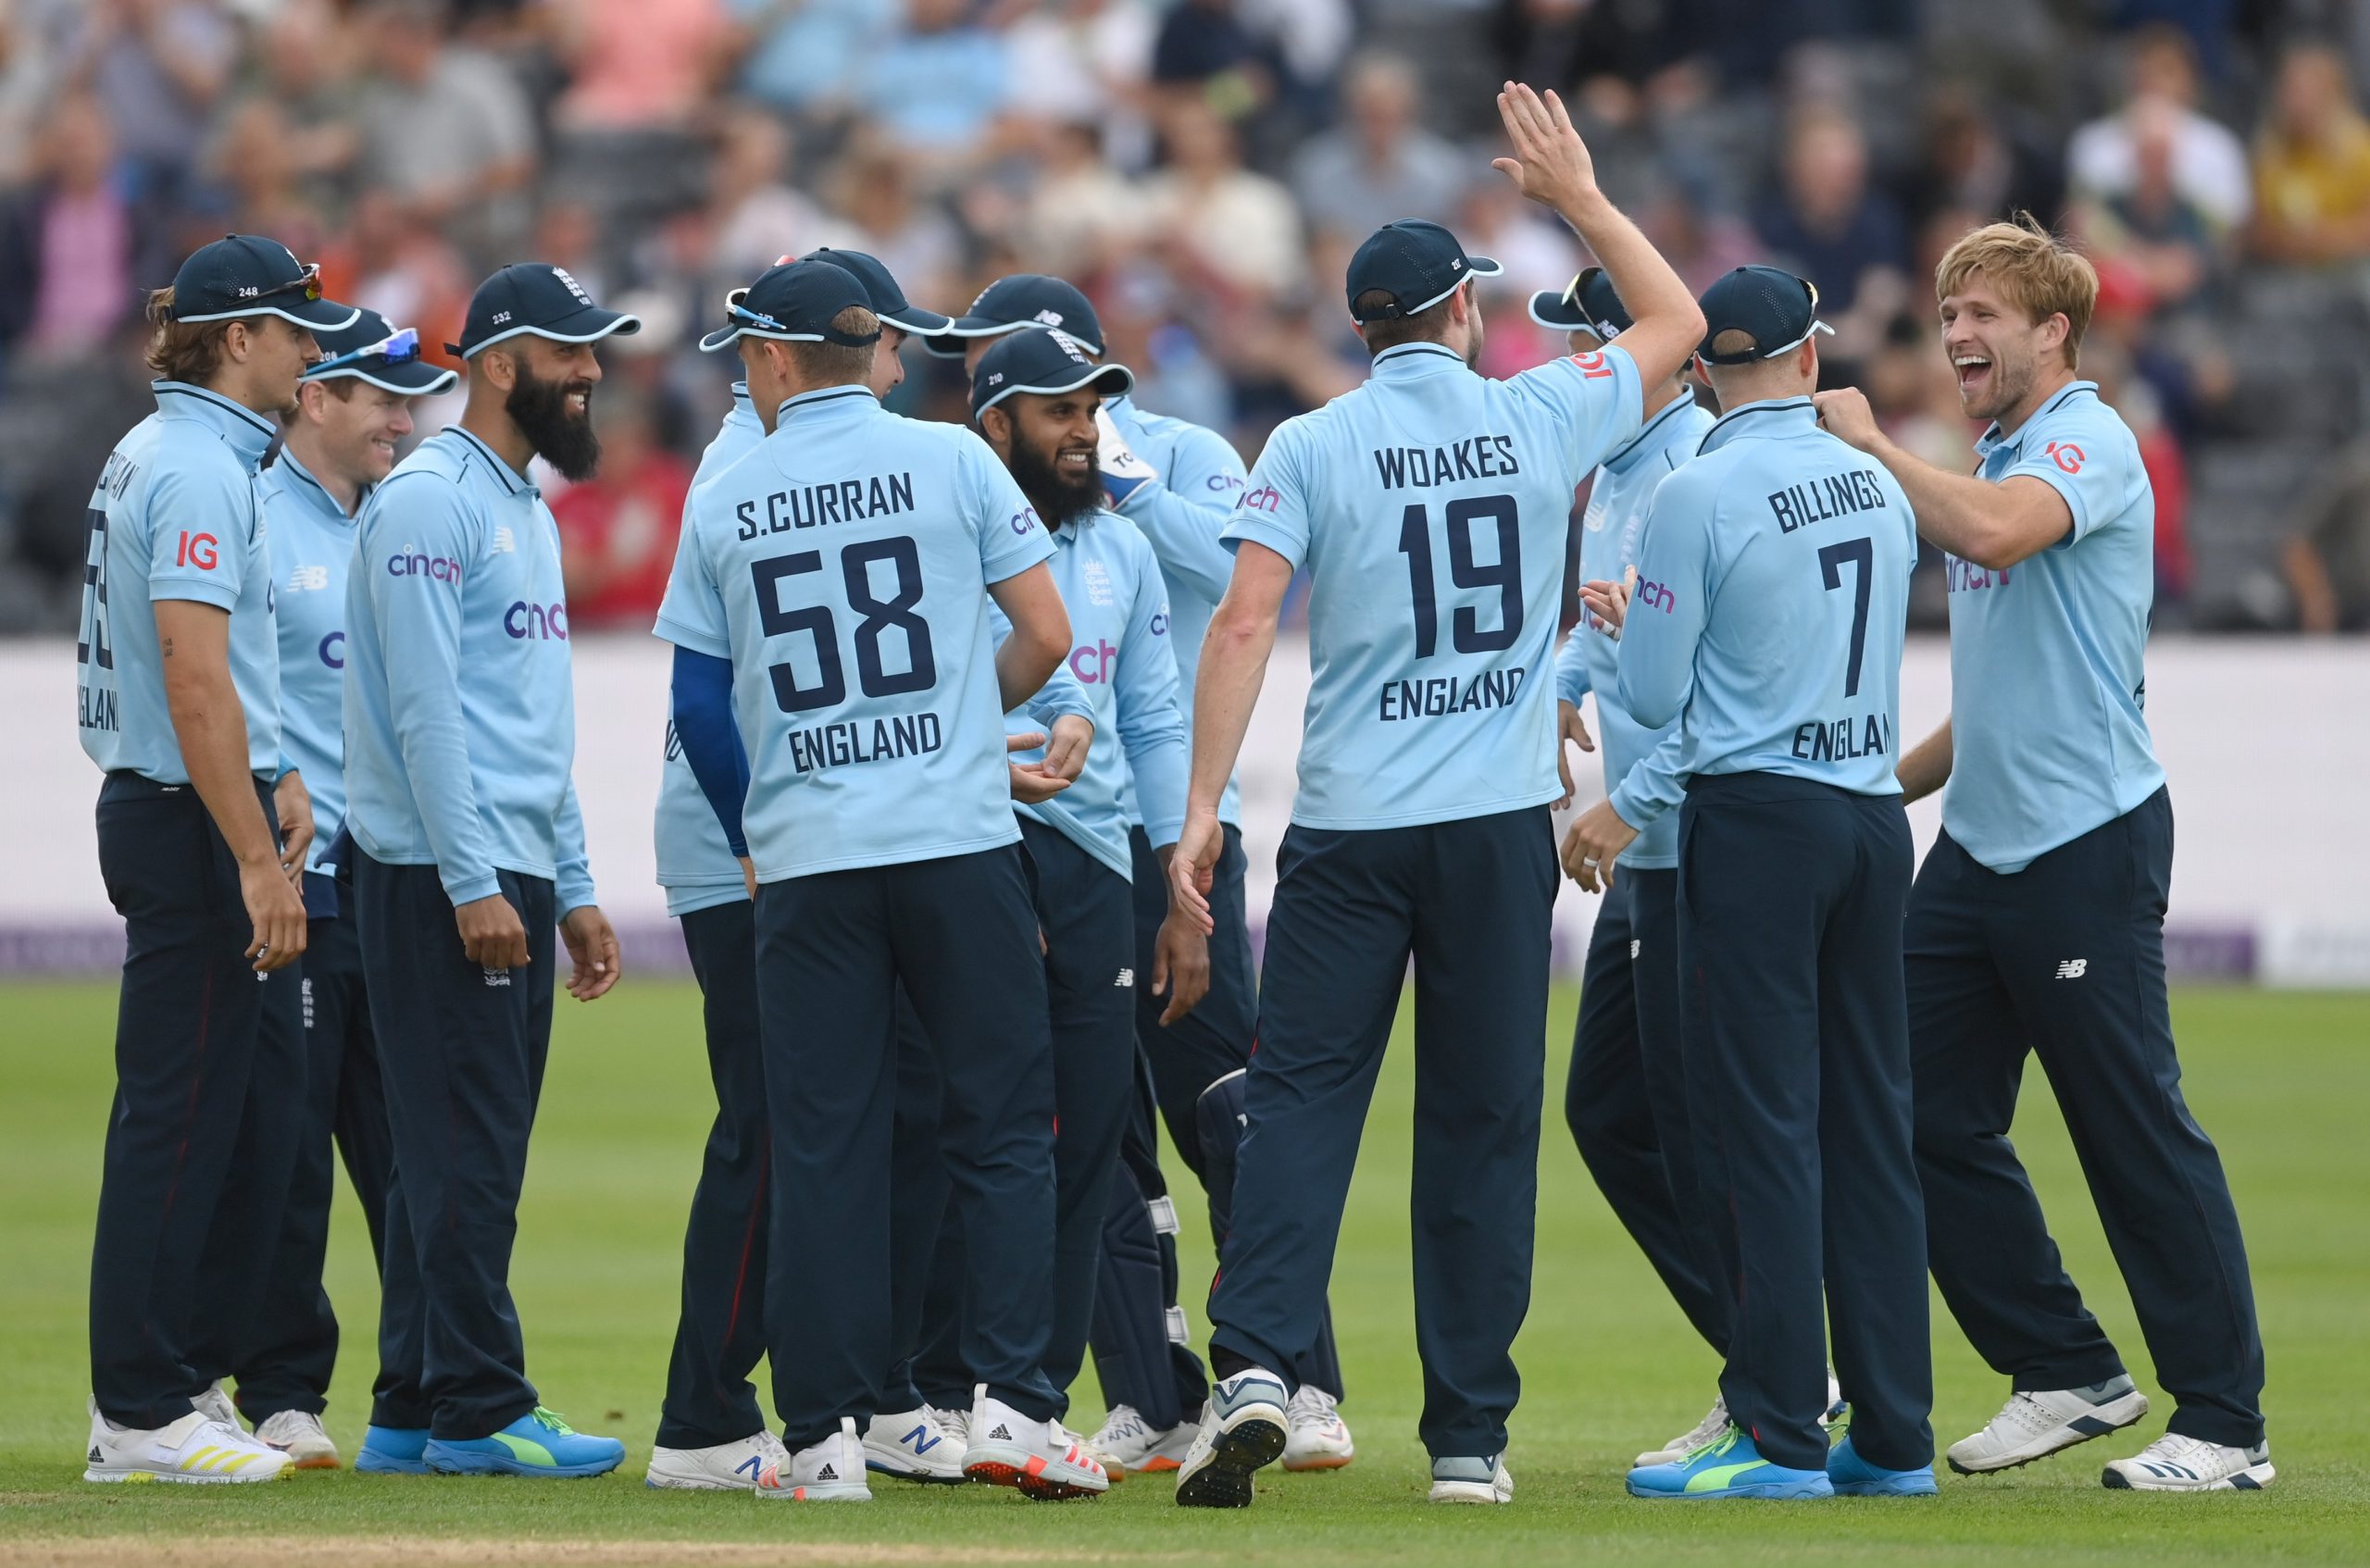 ICC Men’s T20 Cricket World Cup: England vs Sri Lanka Predictions